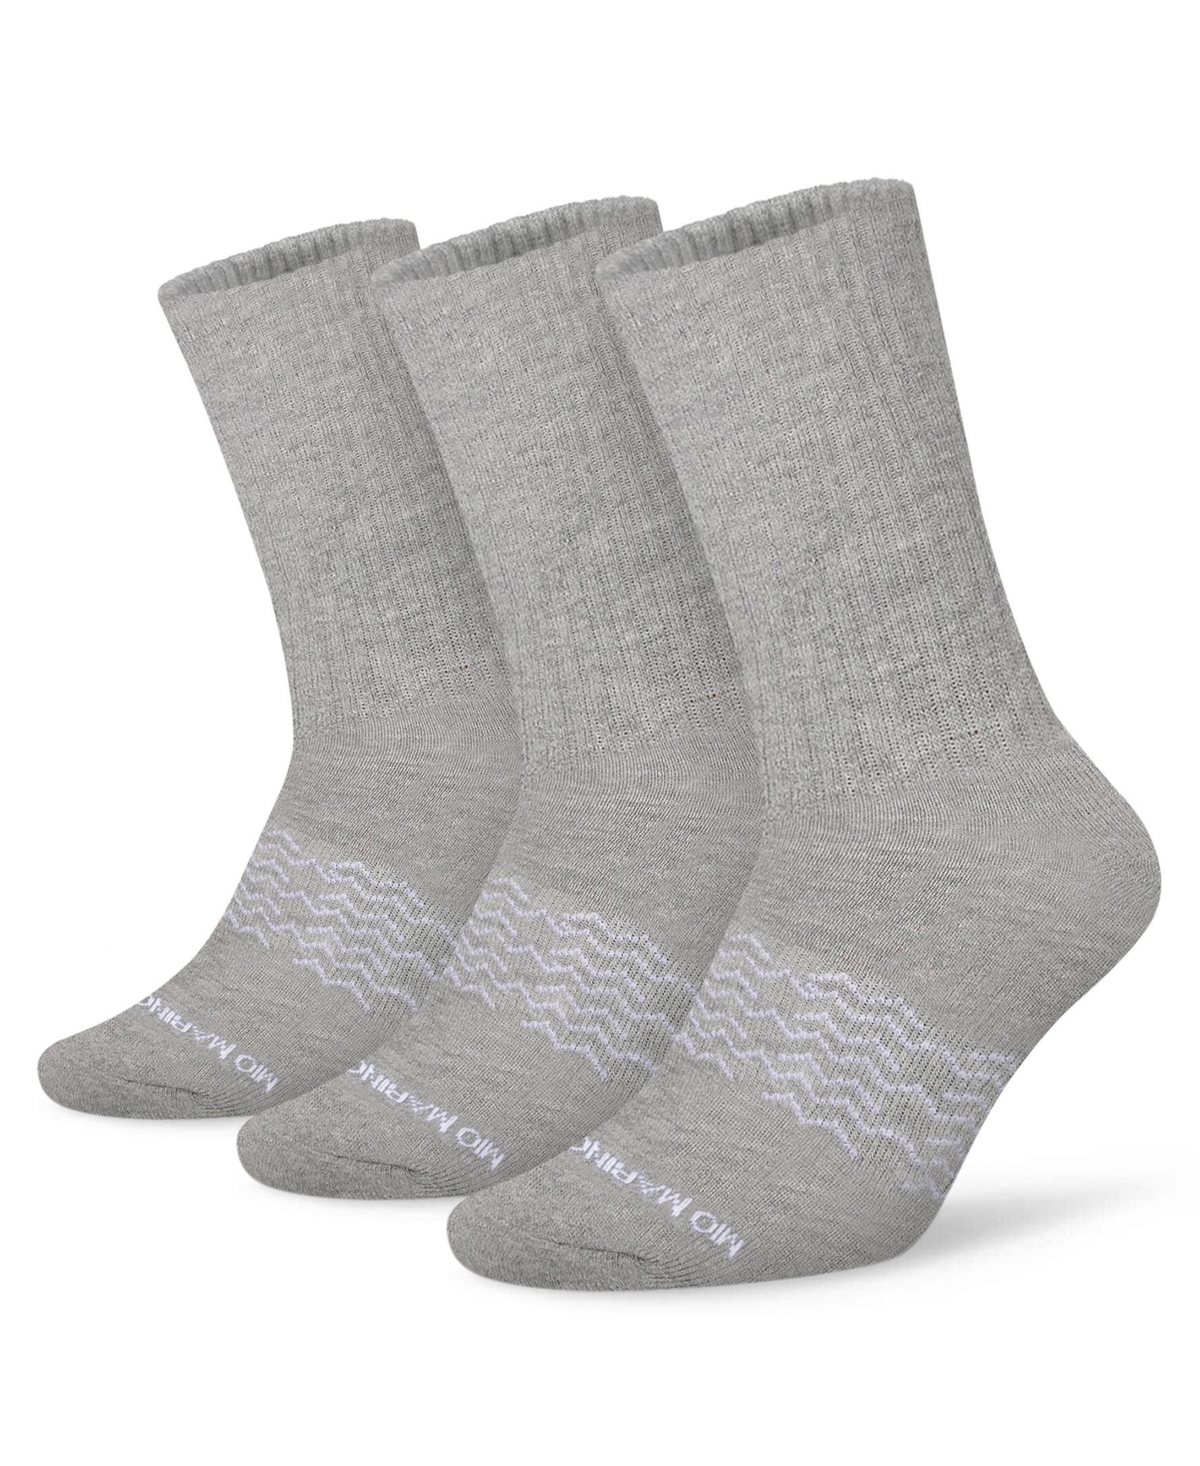 Men's Moisture Control Athletic Crew Socks 3 Pack - Azure - space dye